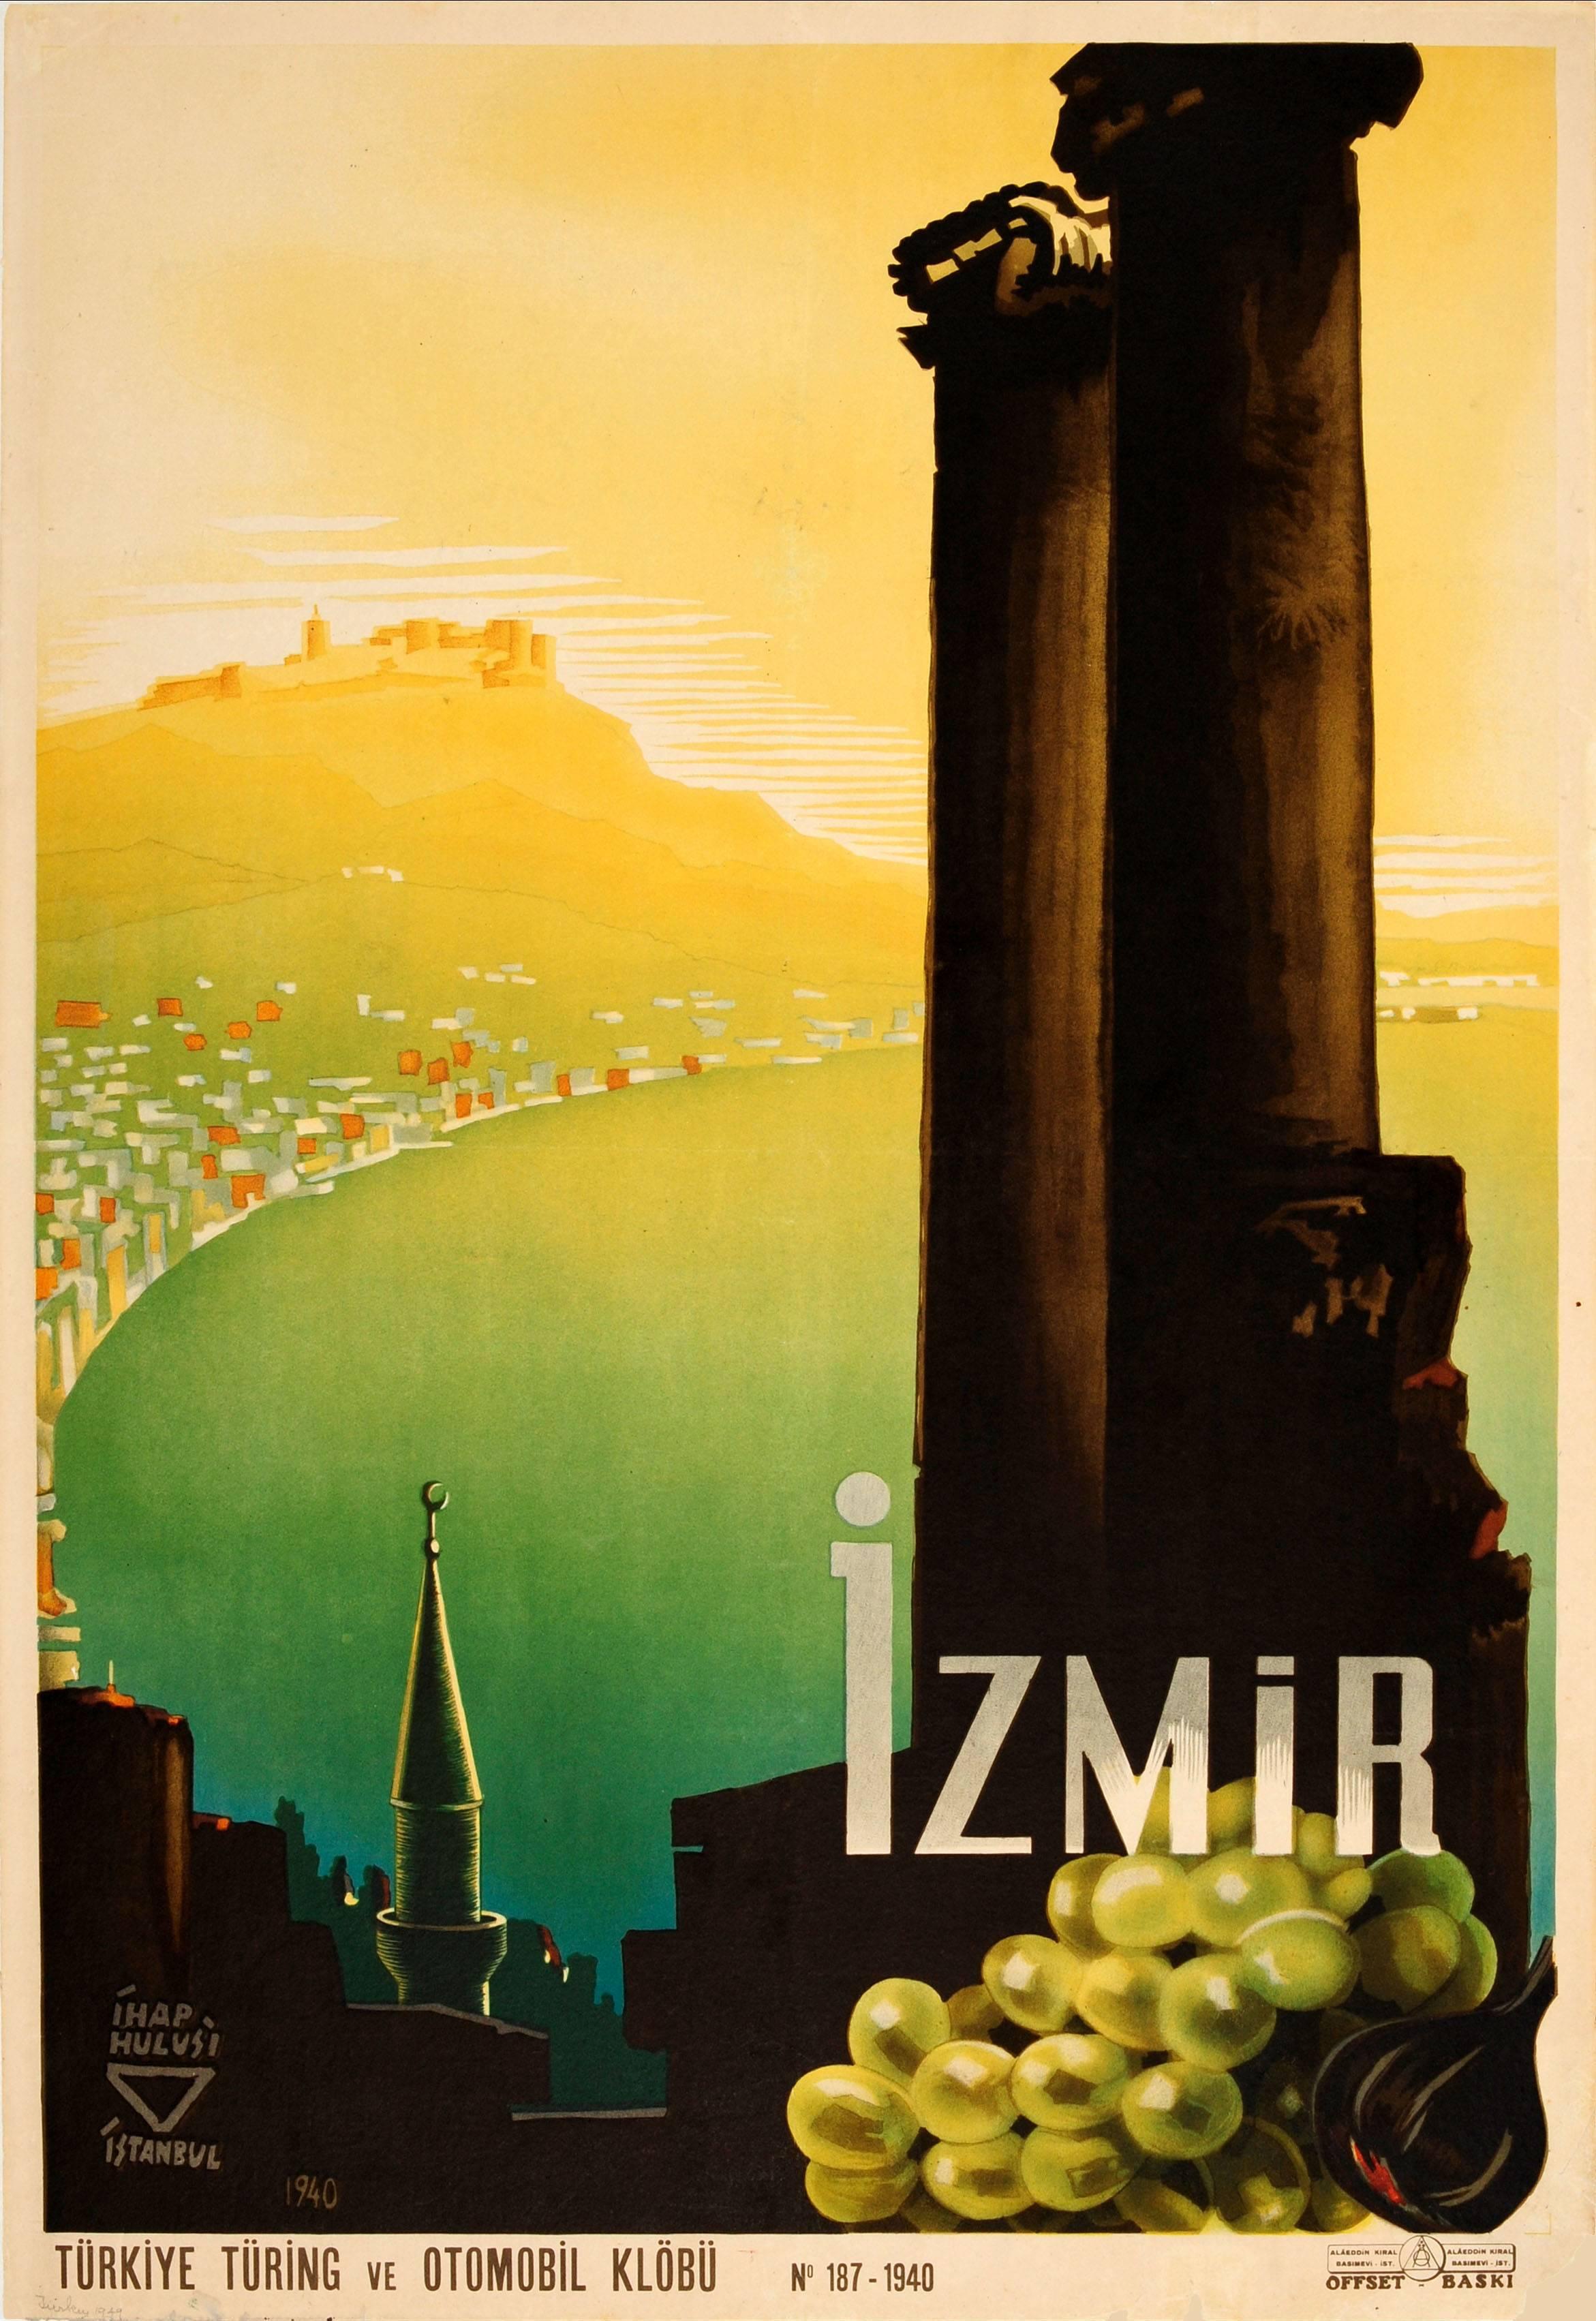 Ihap Hulusi Görey Print - Rare Original Vintage Turkey Touring And Automobile Club Poster Promoting Izmir